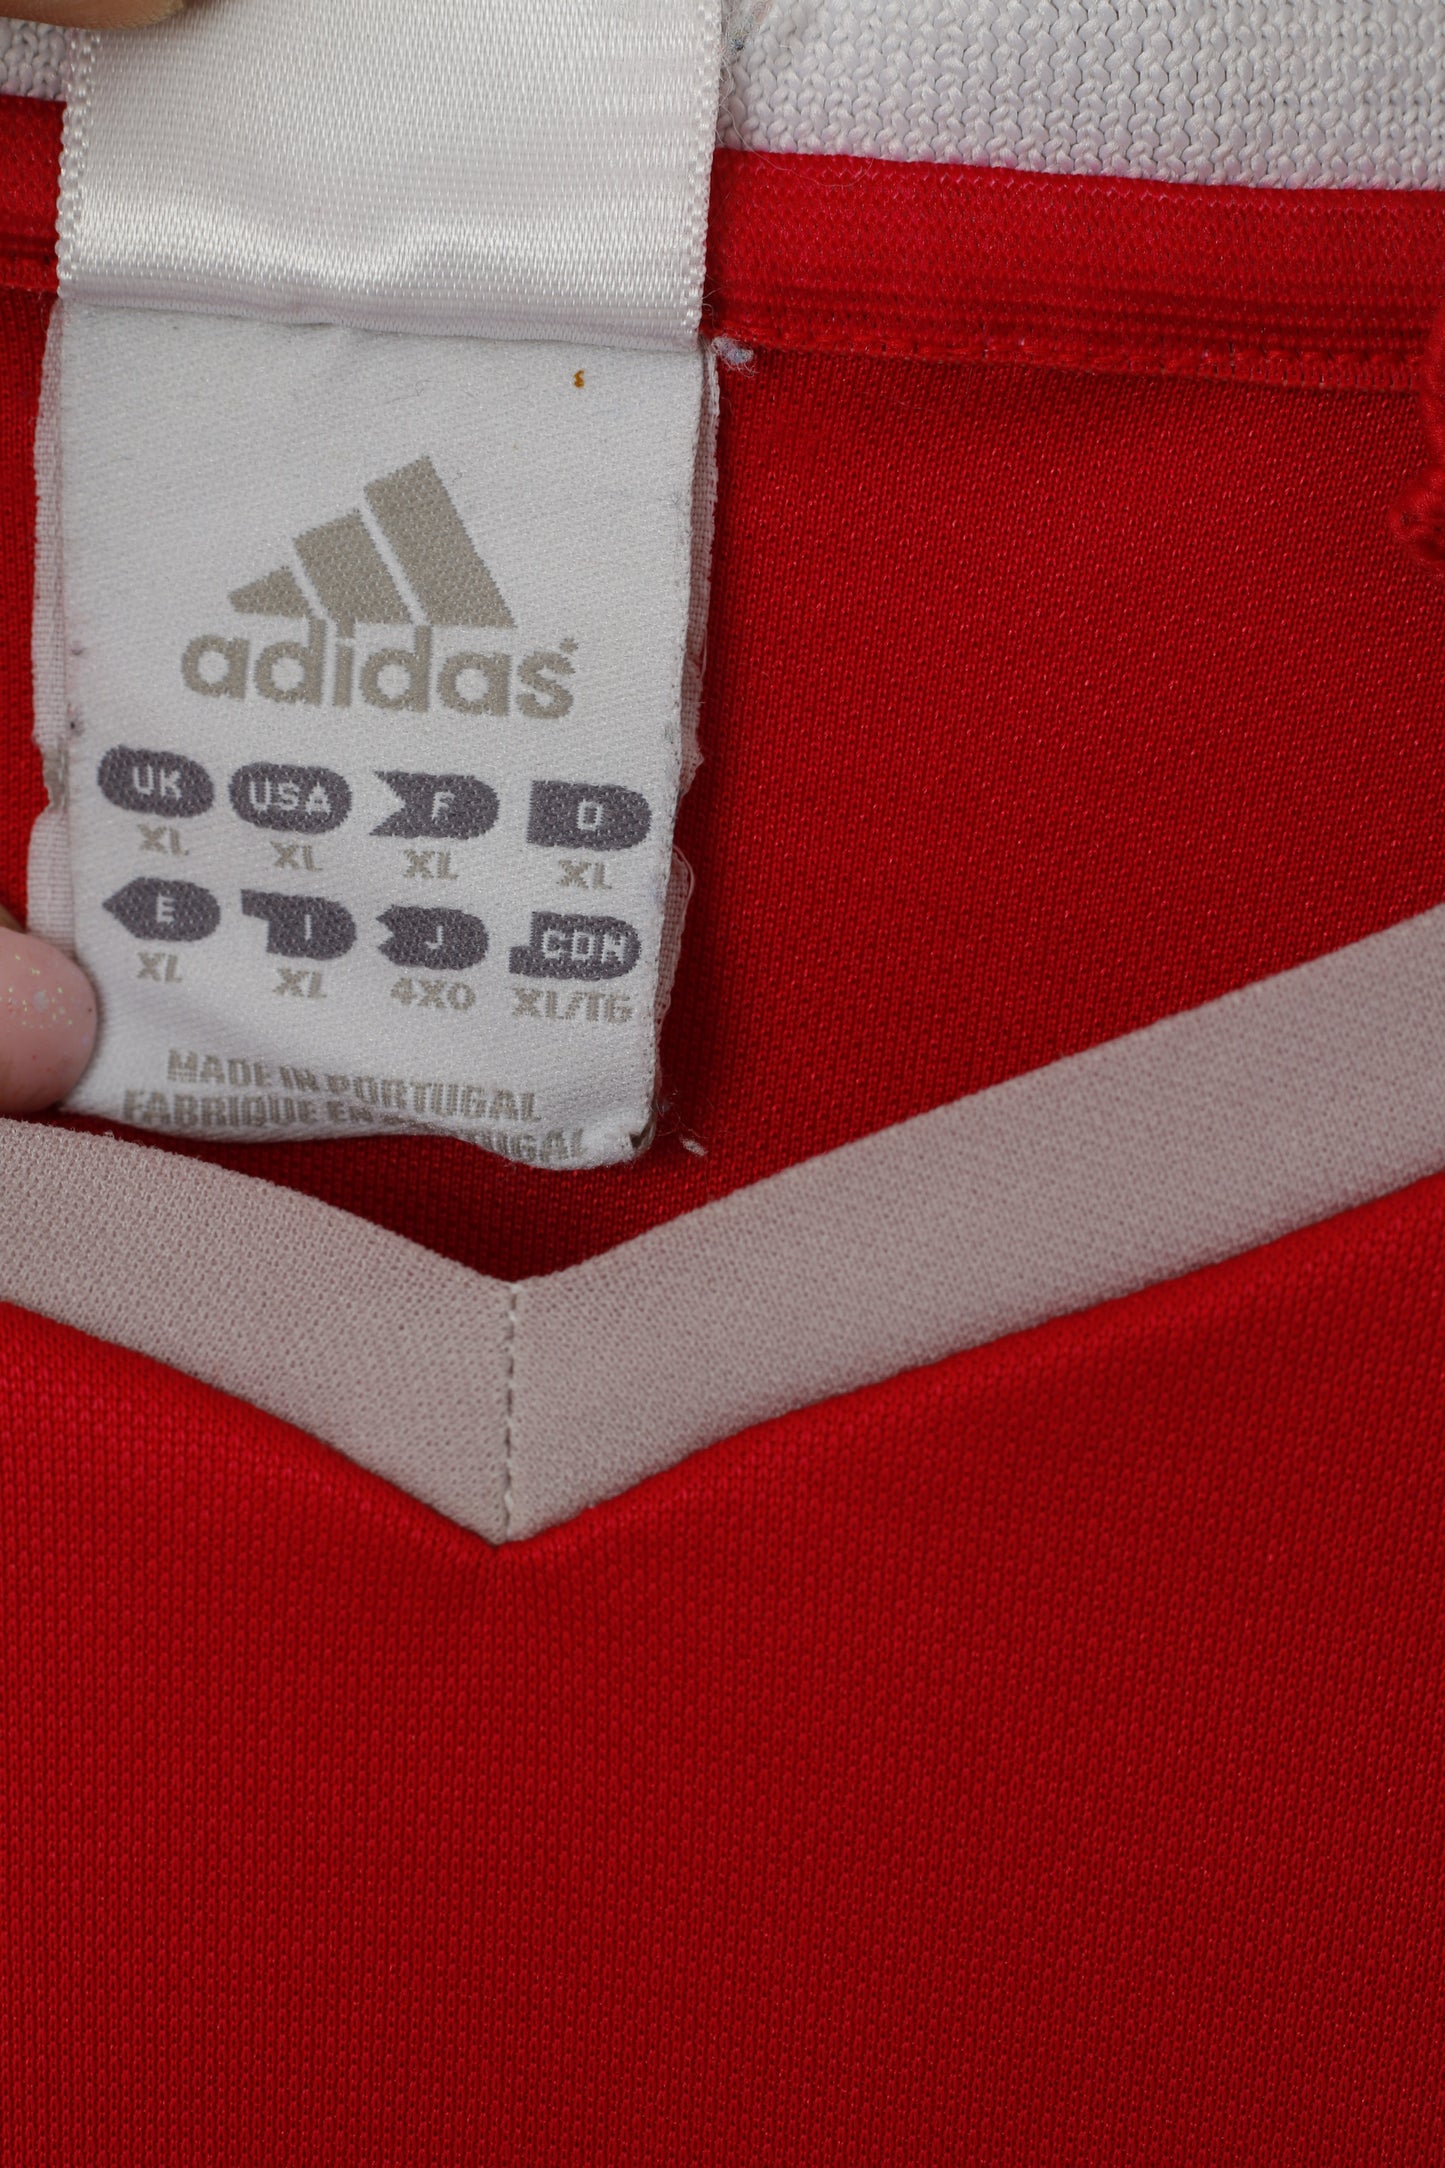 Adidas FC Bayern Munchen Men XL Shirt Red Vintage Football Club Jersey Top